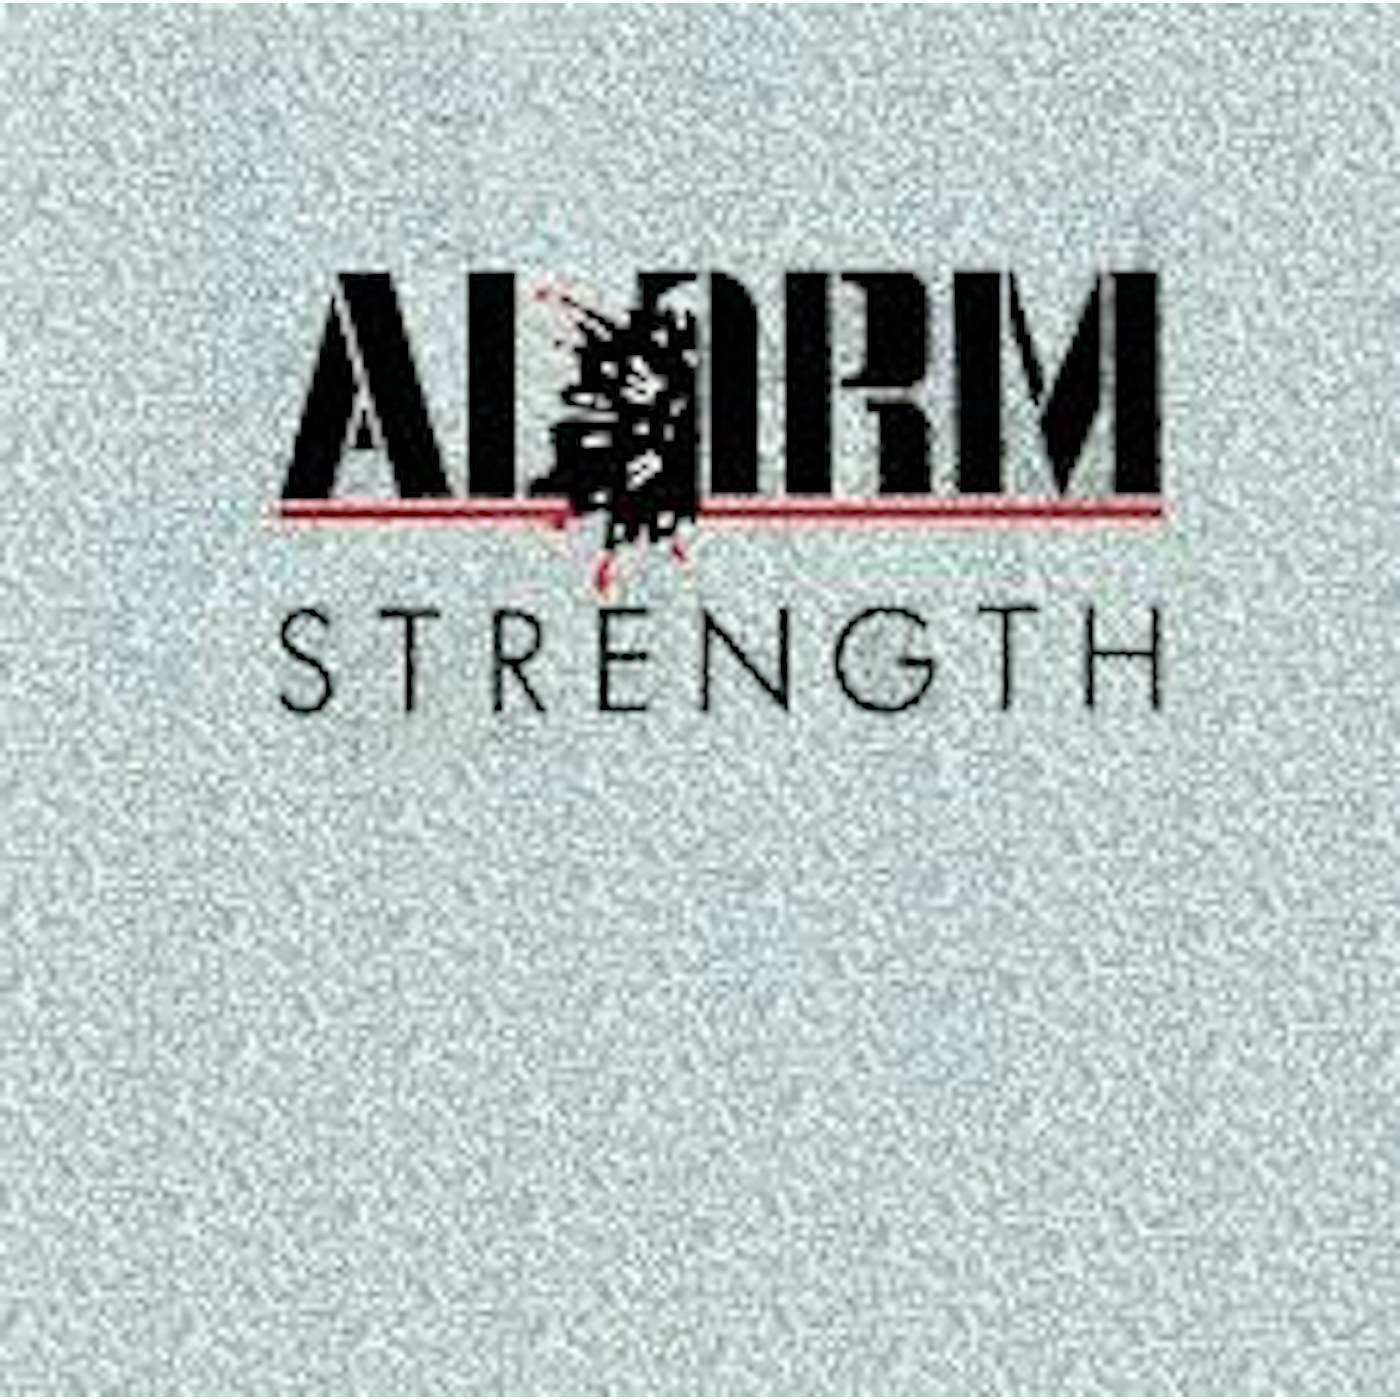 Alarm STRENGTH Vinyl Record